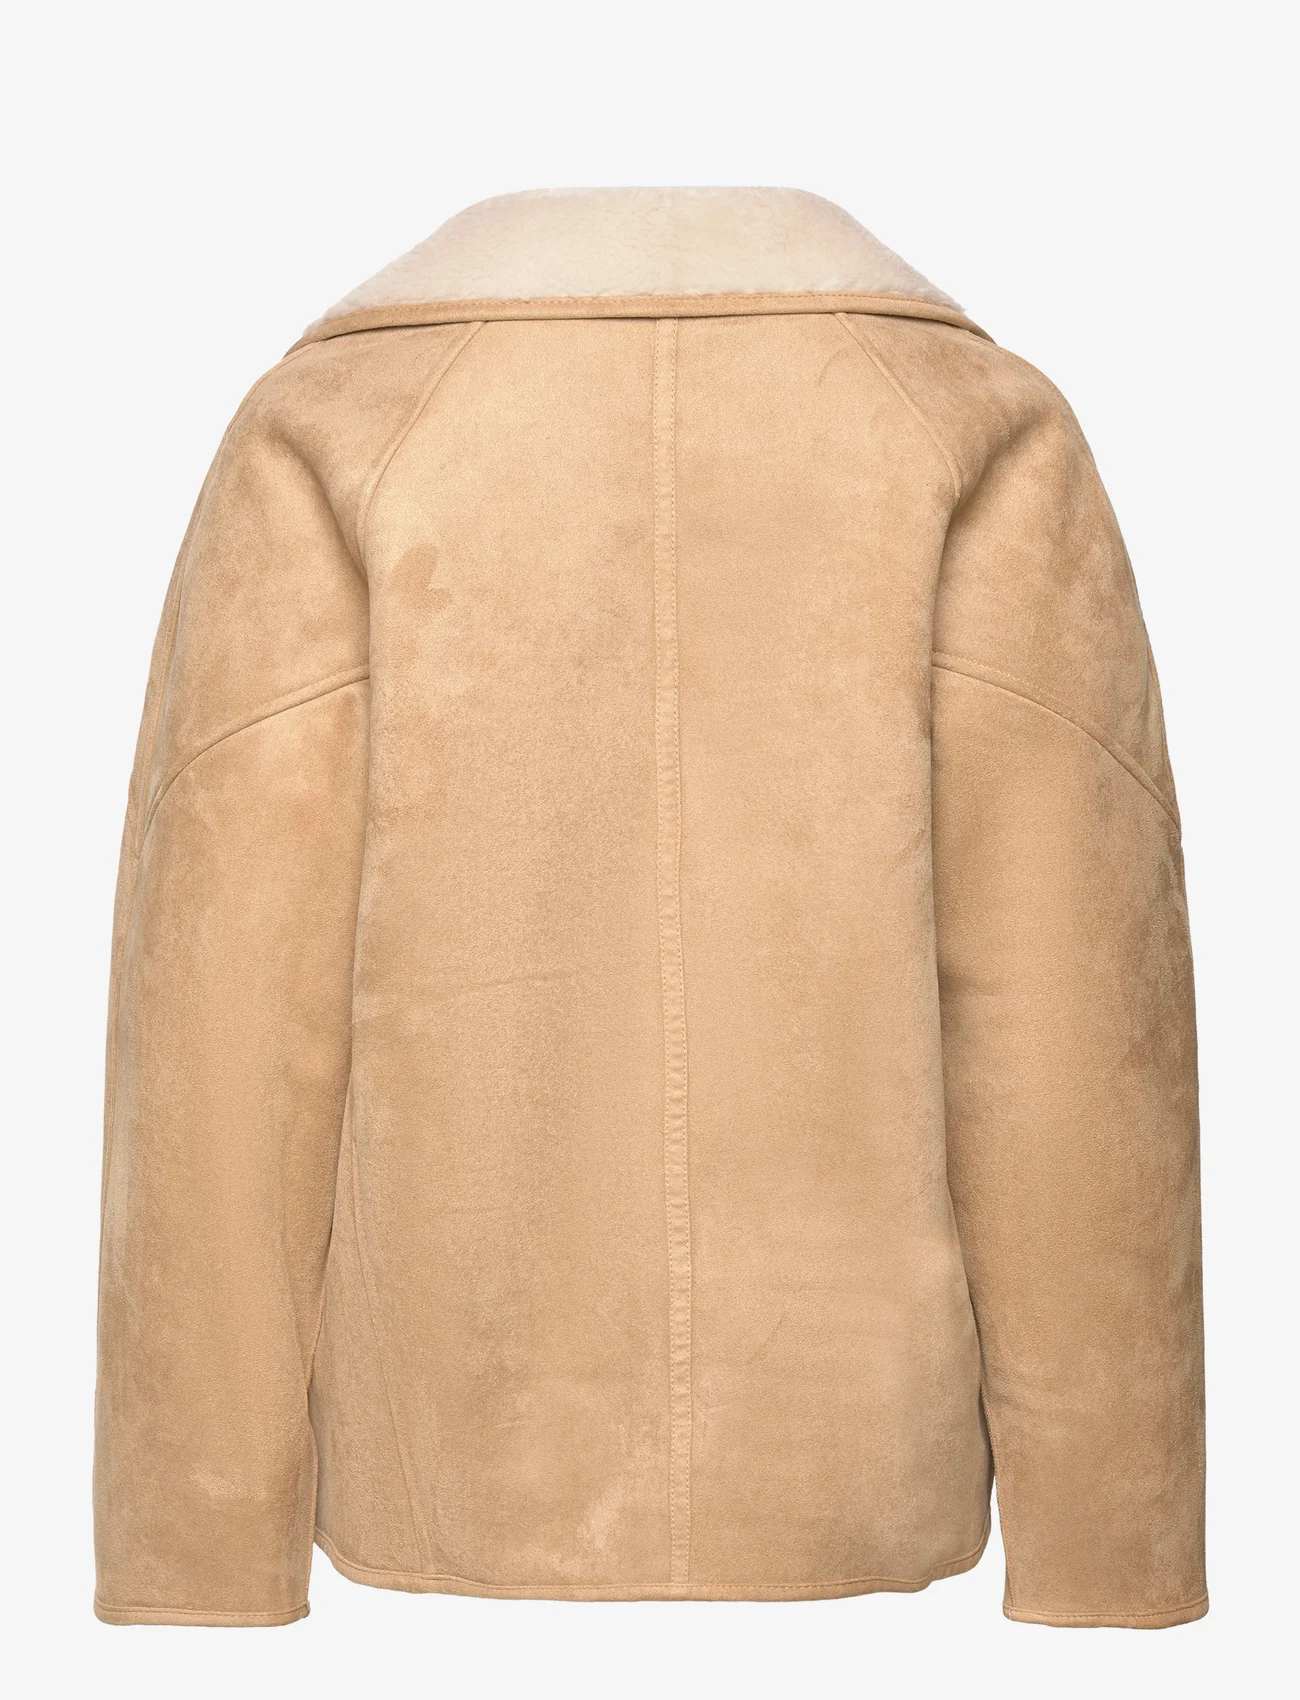 Mango - Shearling-lined coat with buttons - forårsjakker - medium brown - 1